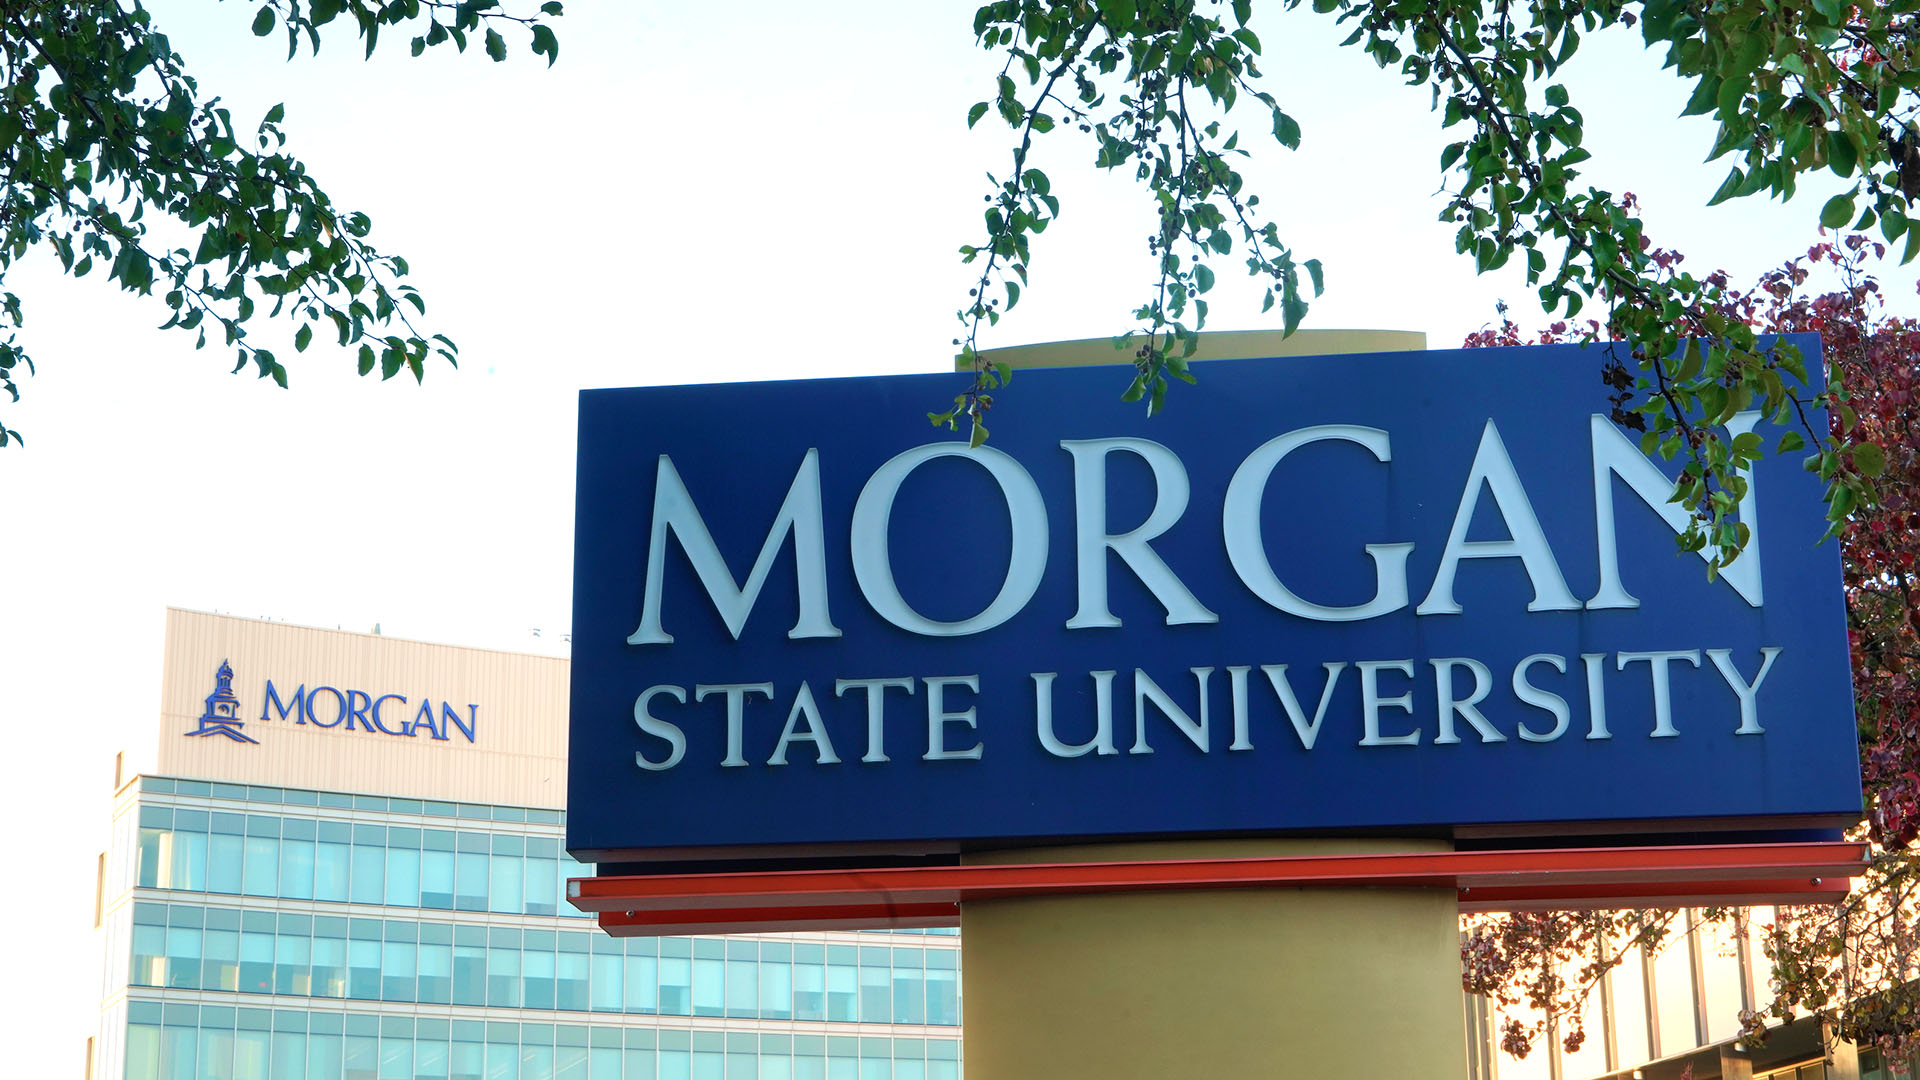 Morgan State signage